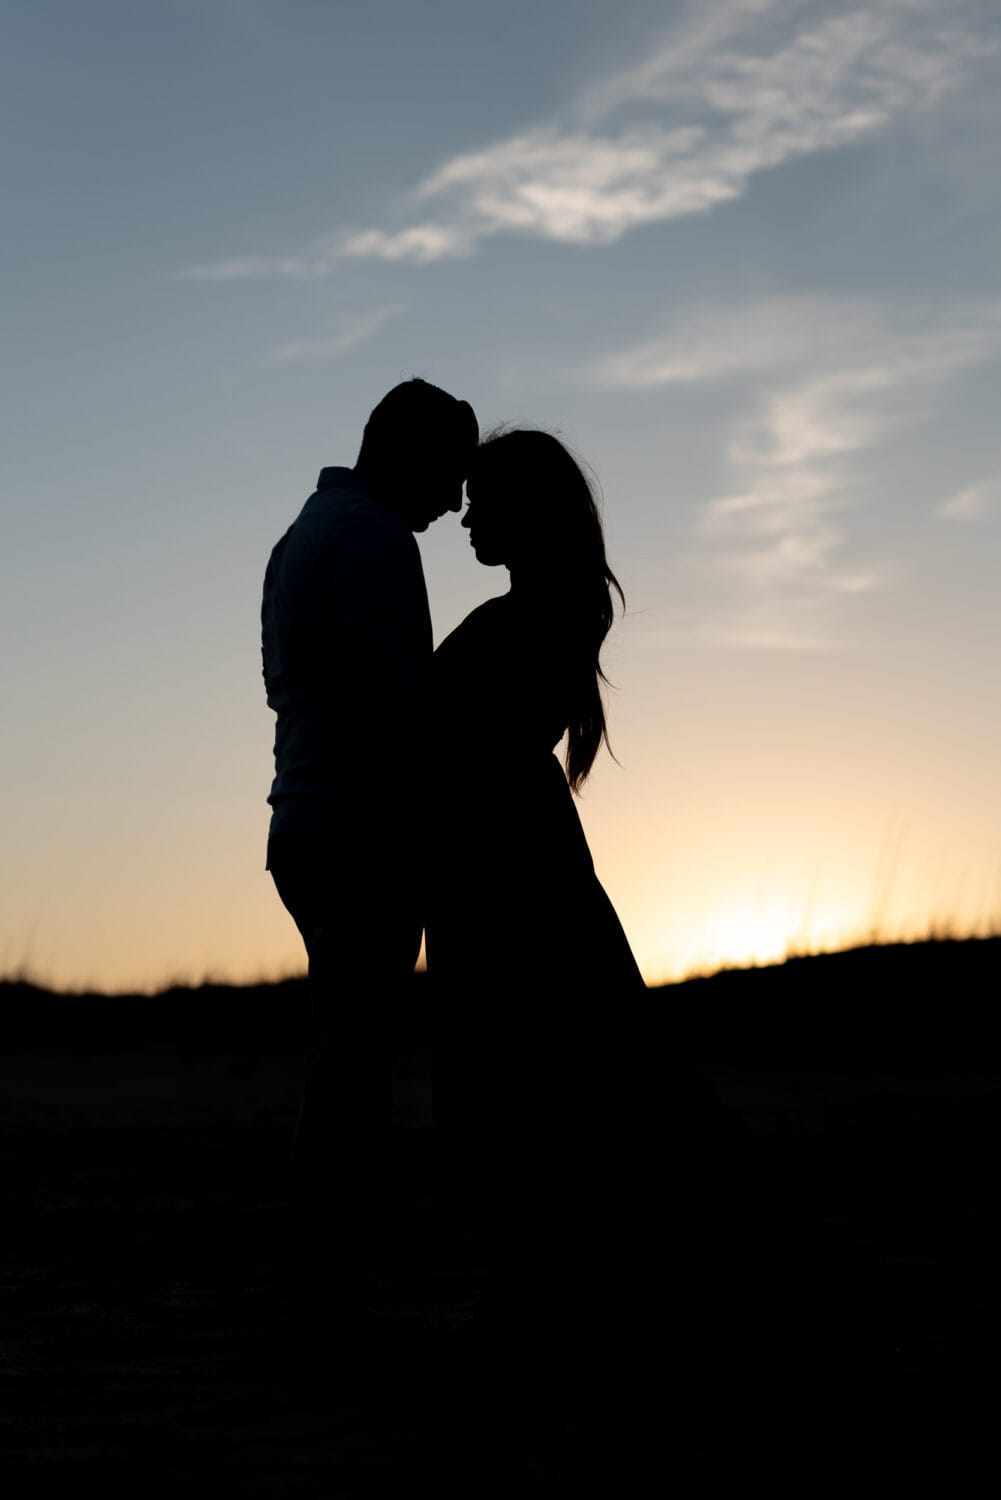 Man and woman silhouette - Huntington Beach State Park